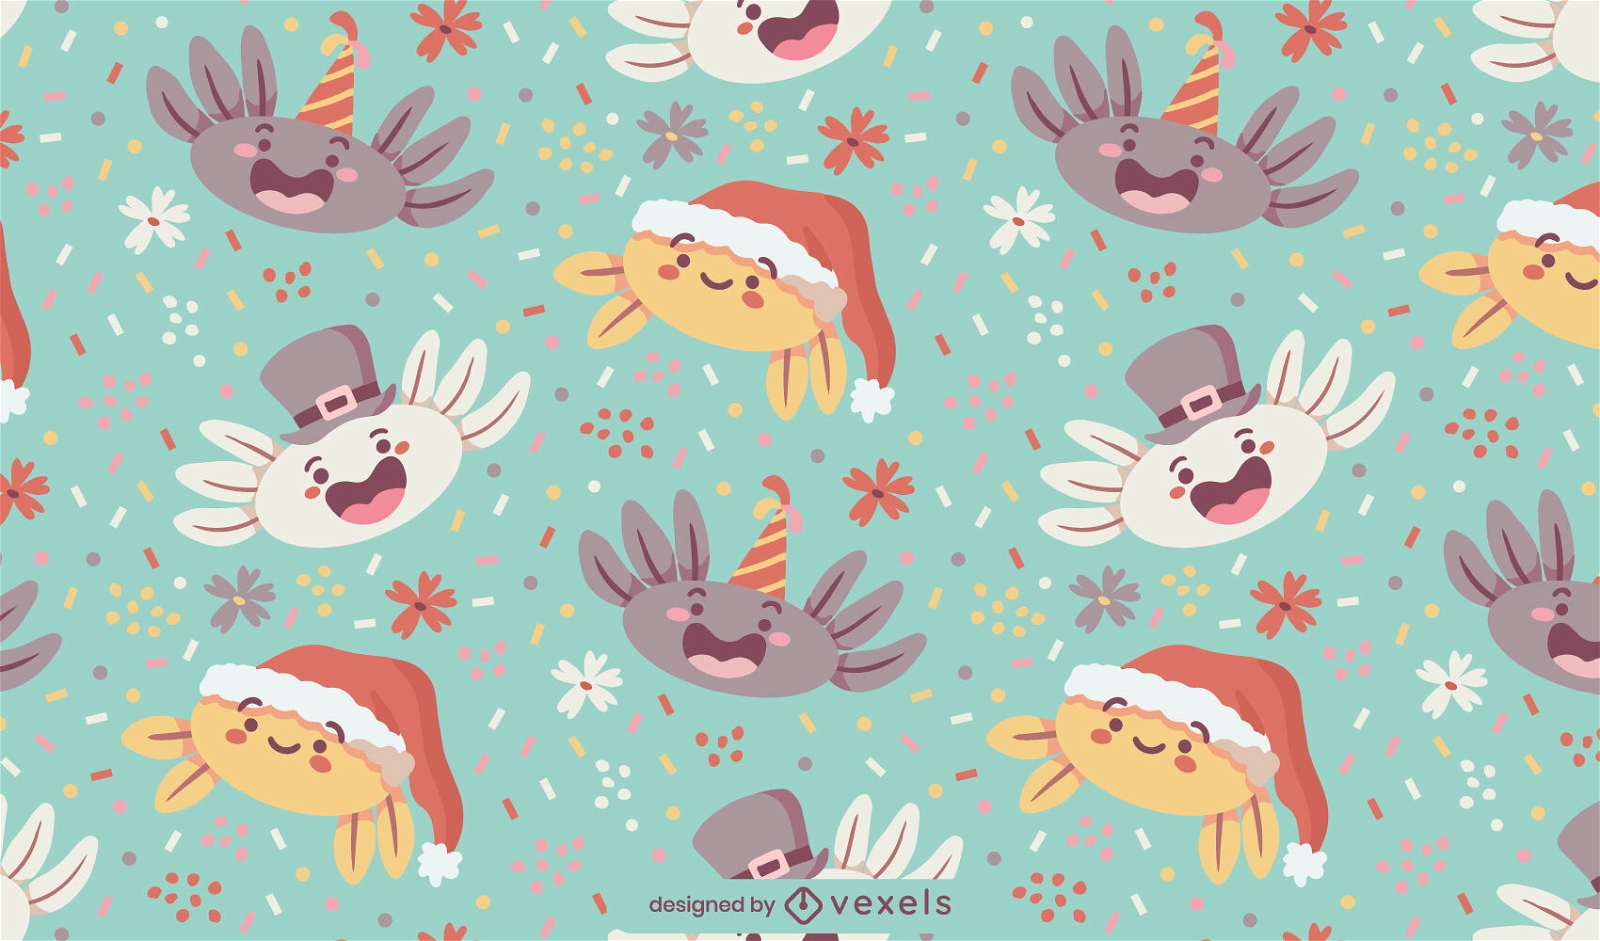 Axolotl holidays characters cute pattern